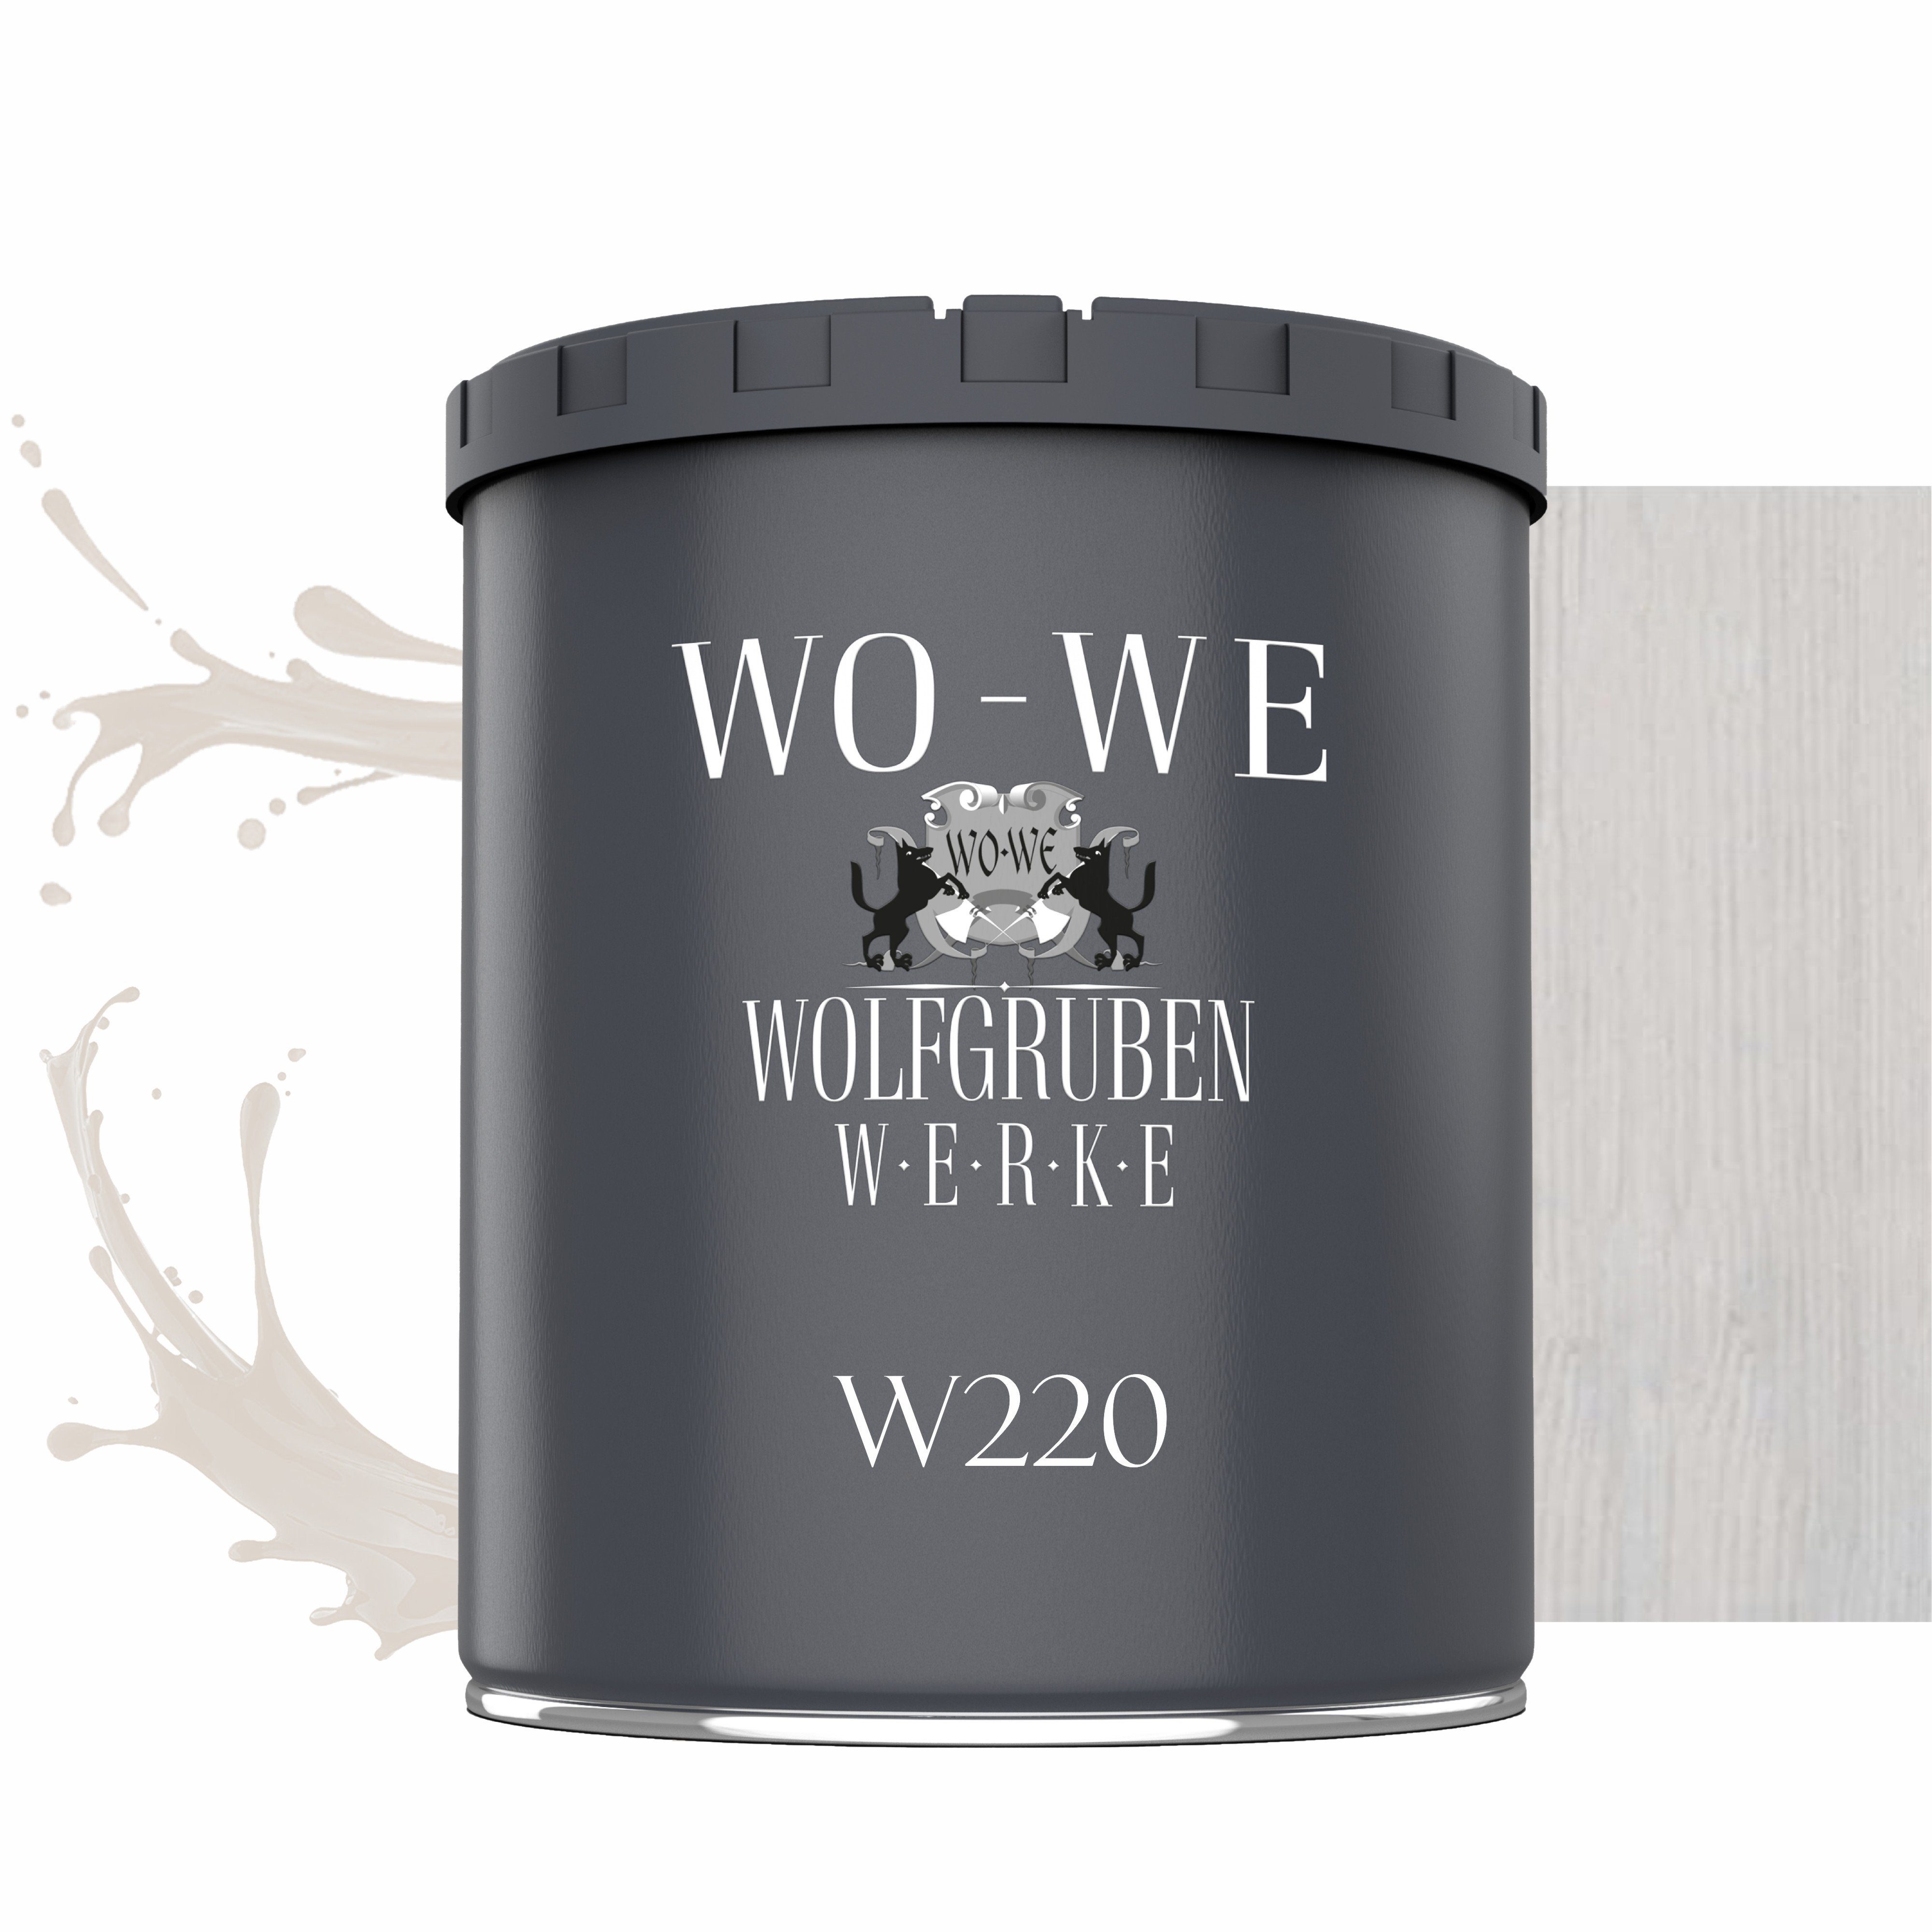 WO-WE Dickschichtlasur Holzschutzlasur 2in1 Holzlasur W220, 1-2,5L, Lösemittelfrei, UV-stabil